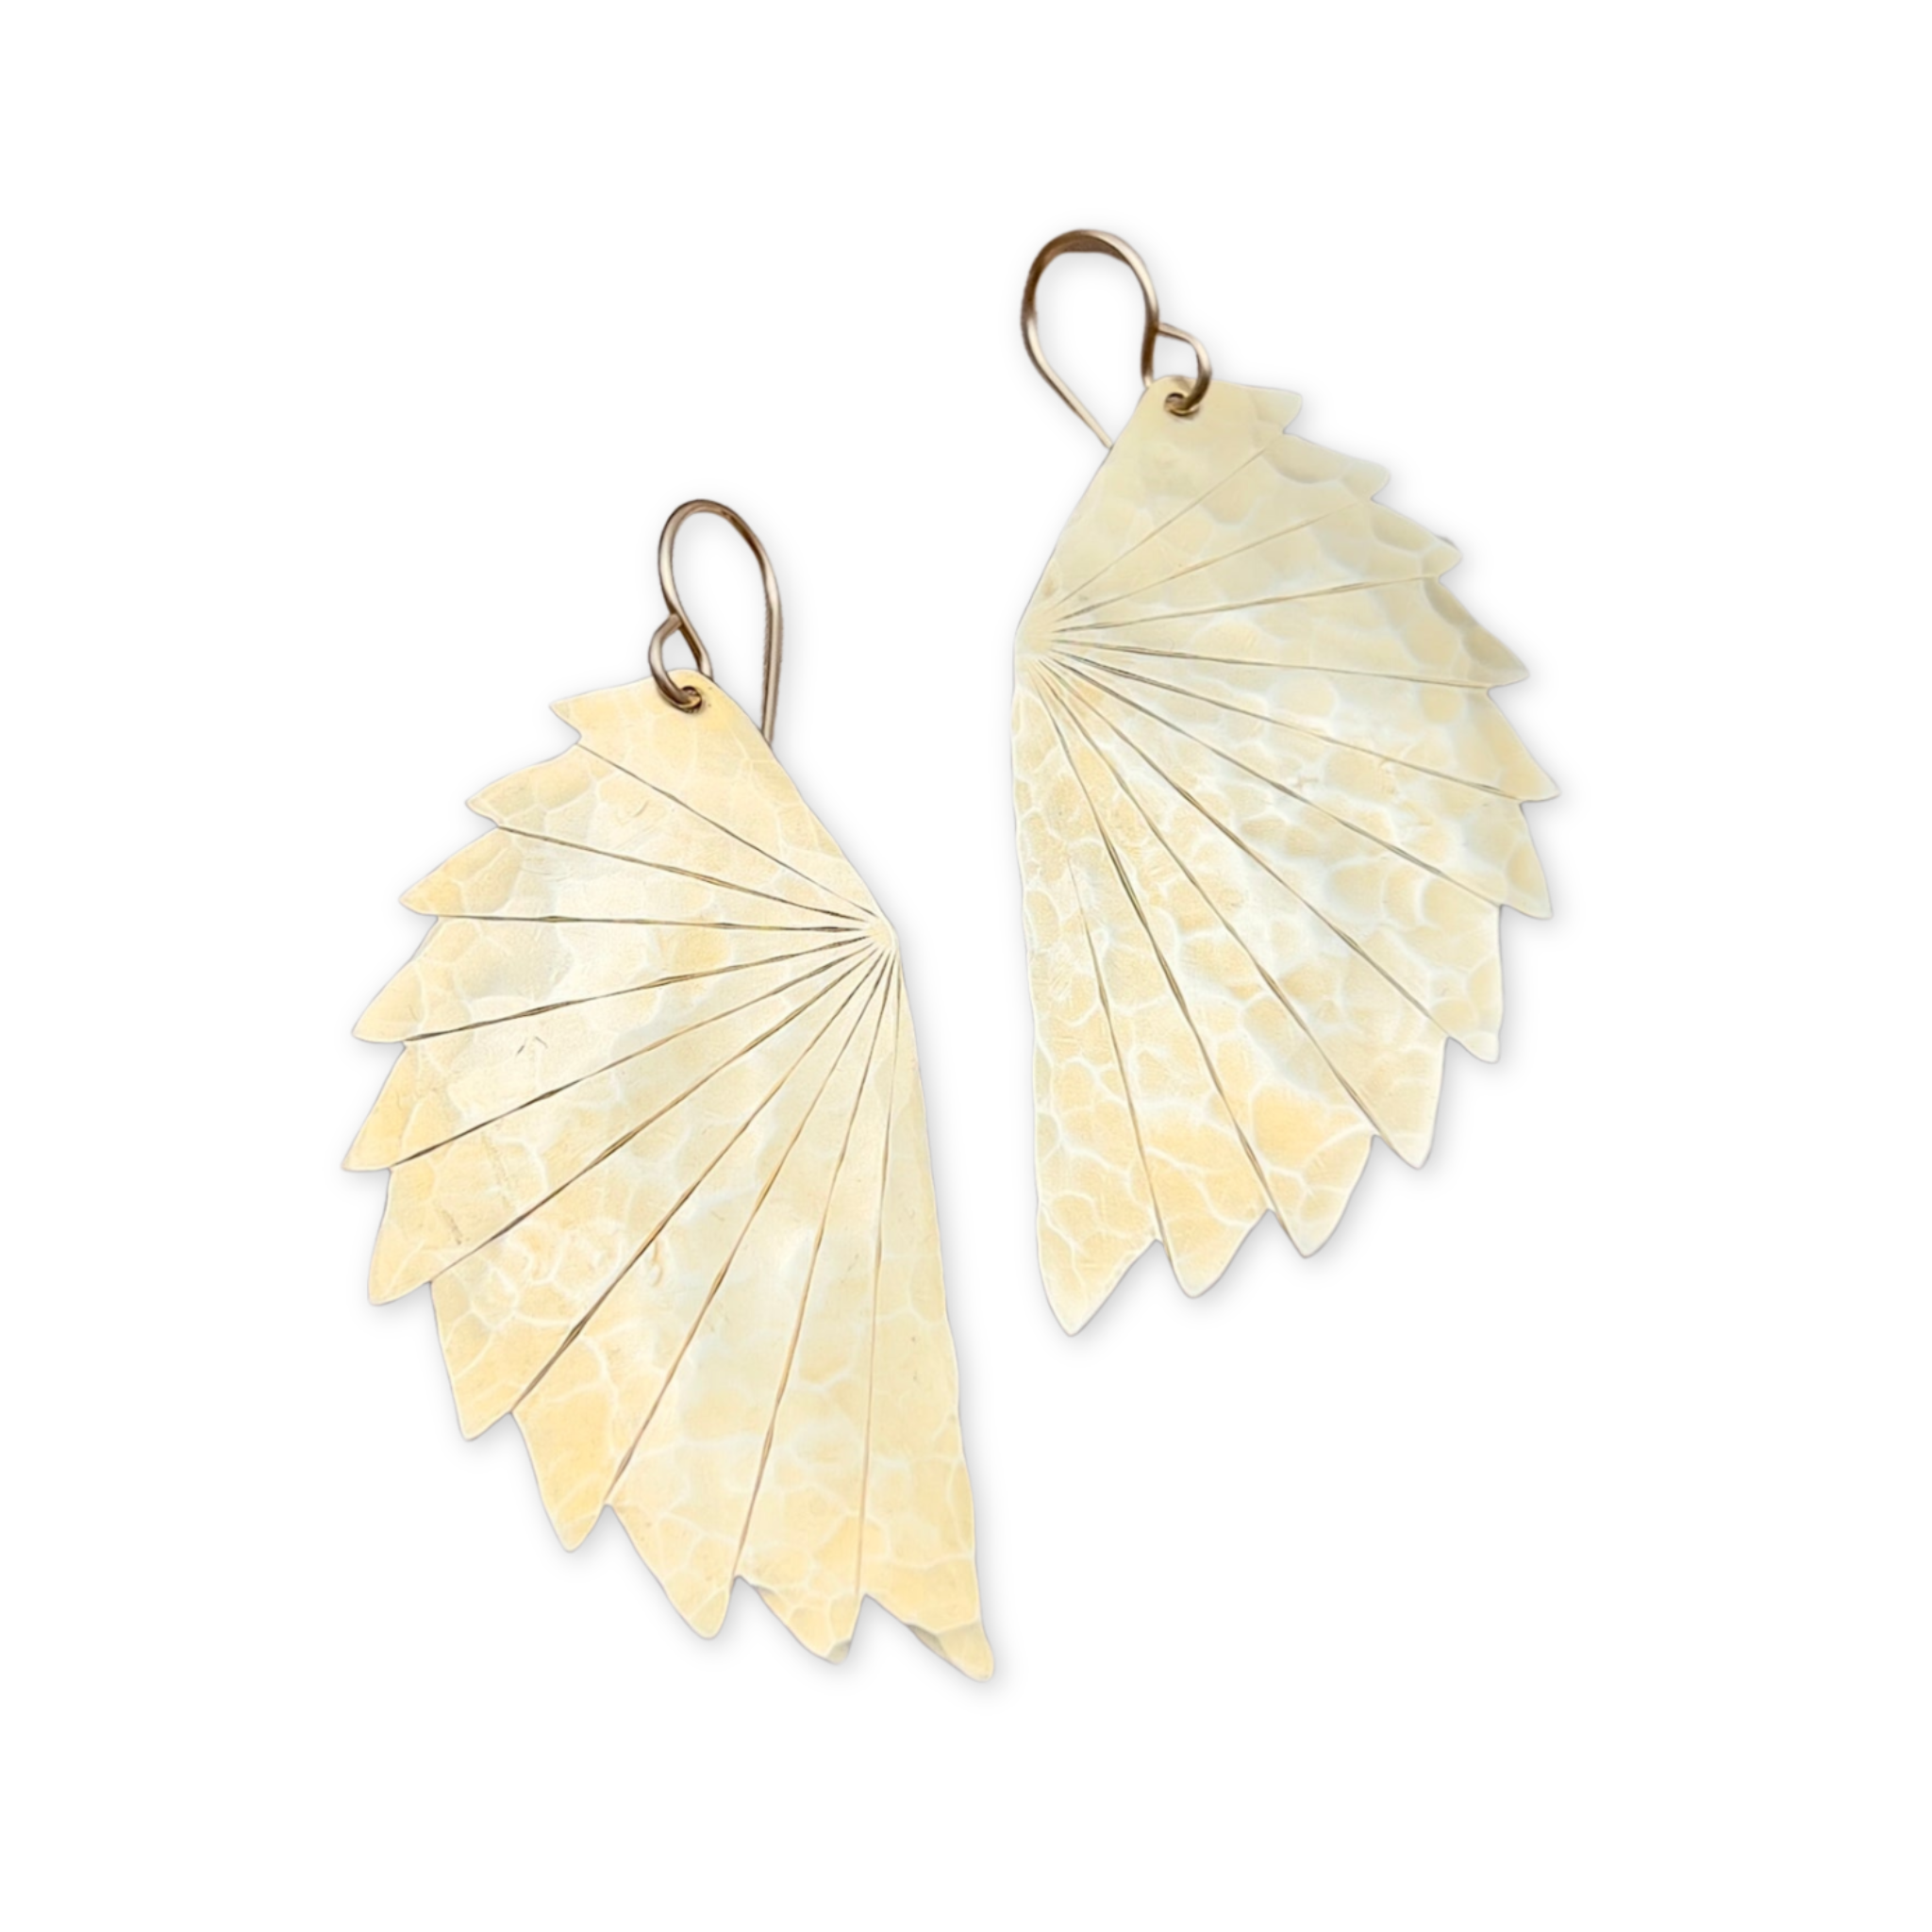 a pair of earrings in the shape of wings